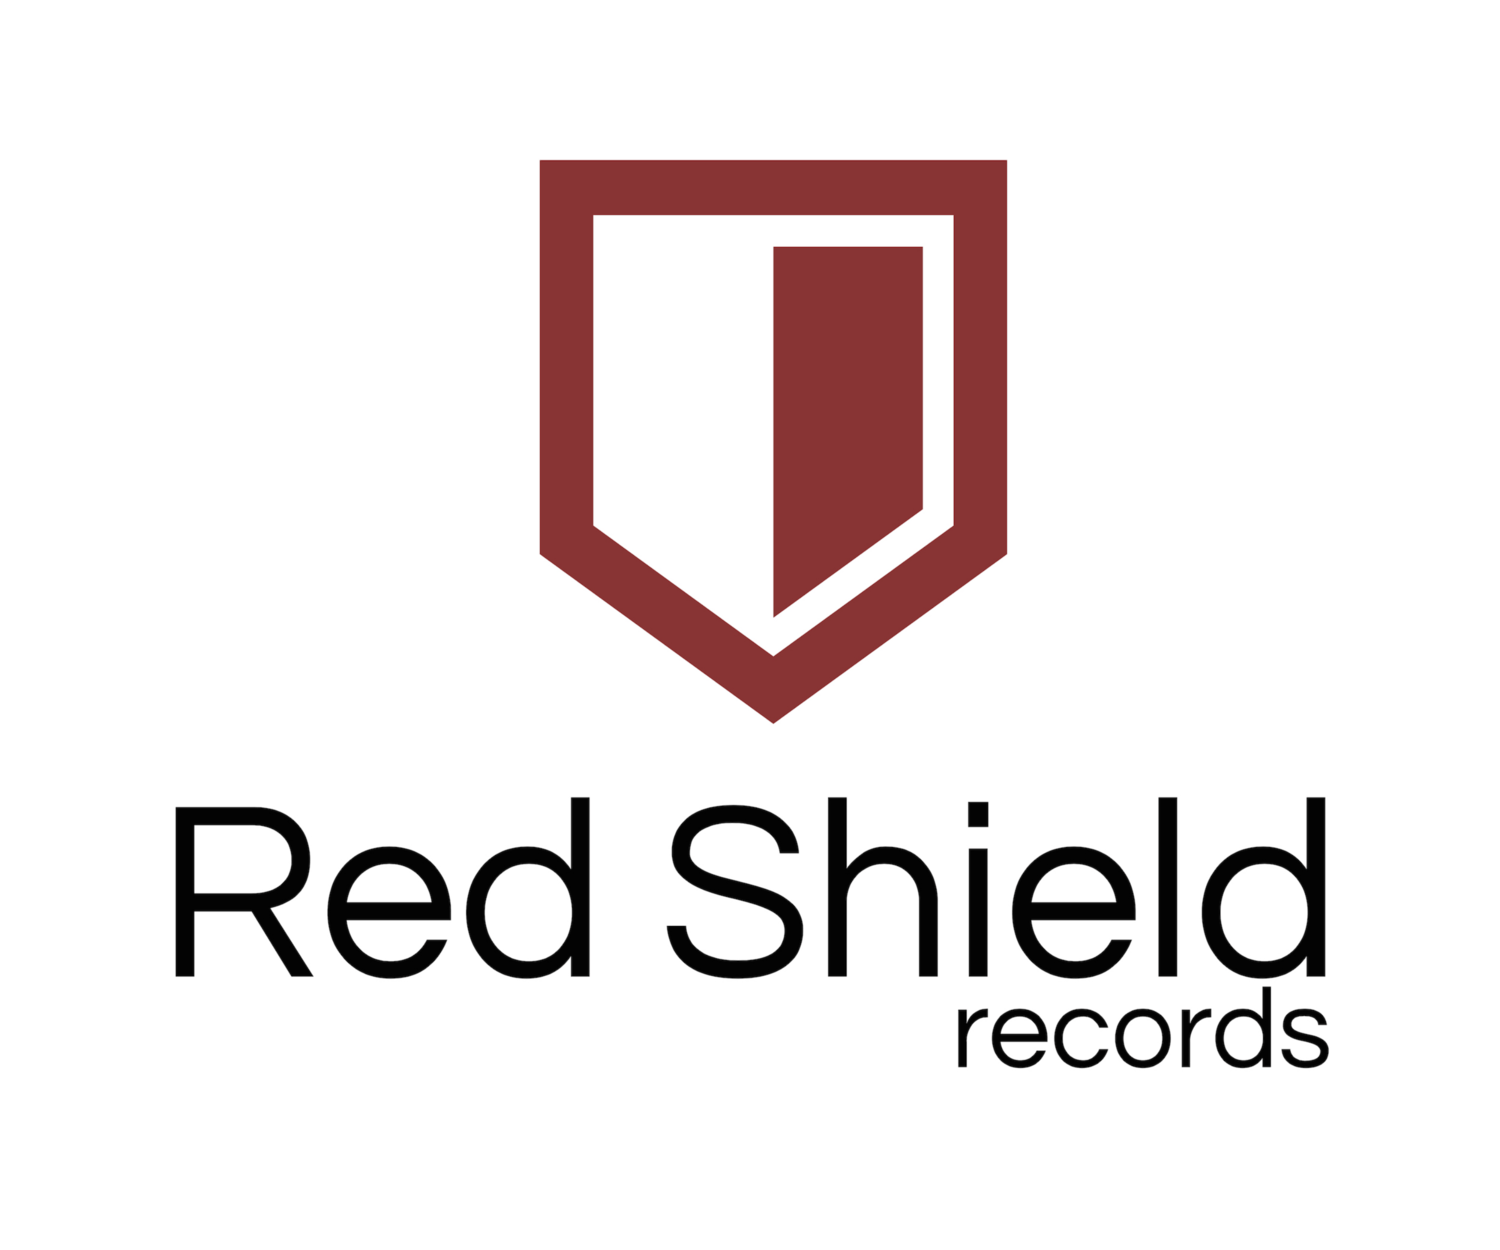 Red Shield in Automotive Industry Logo - Red Shield Music-Amalgama